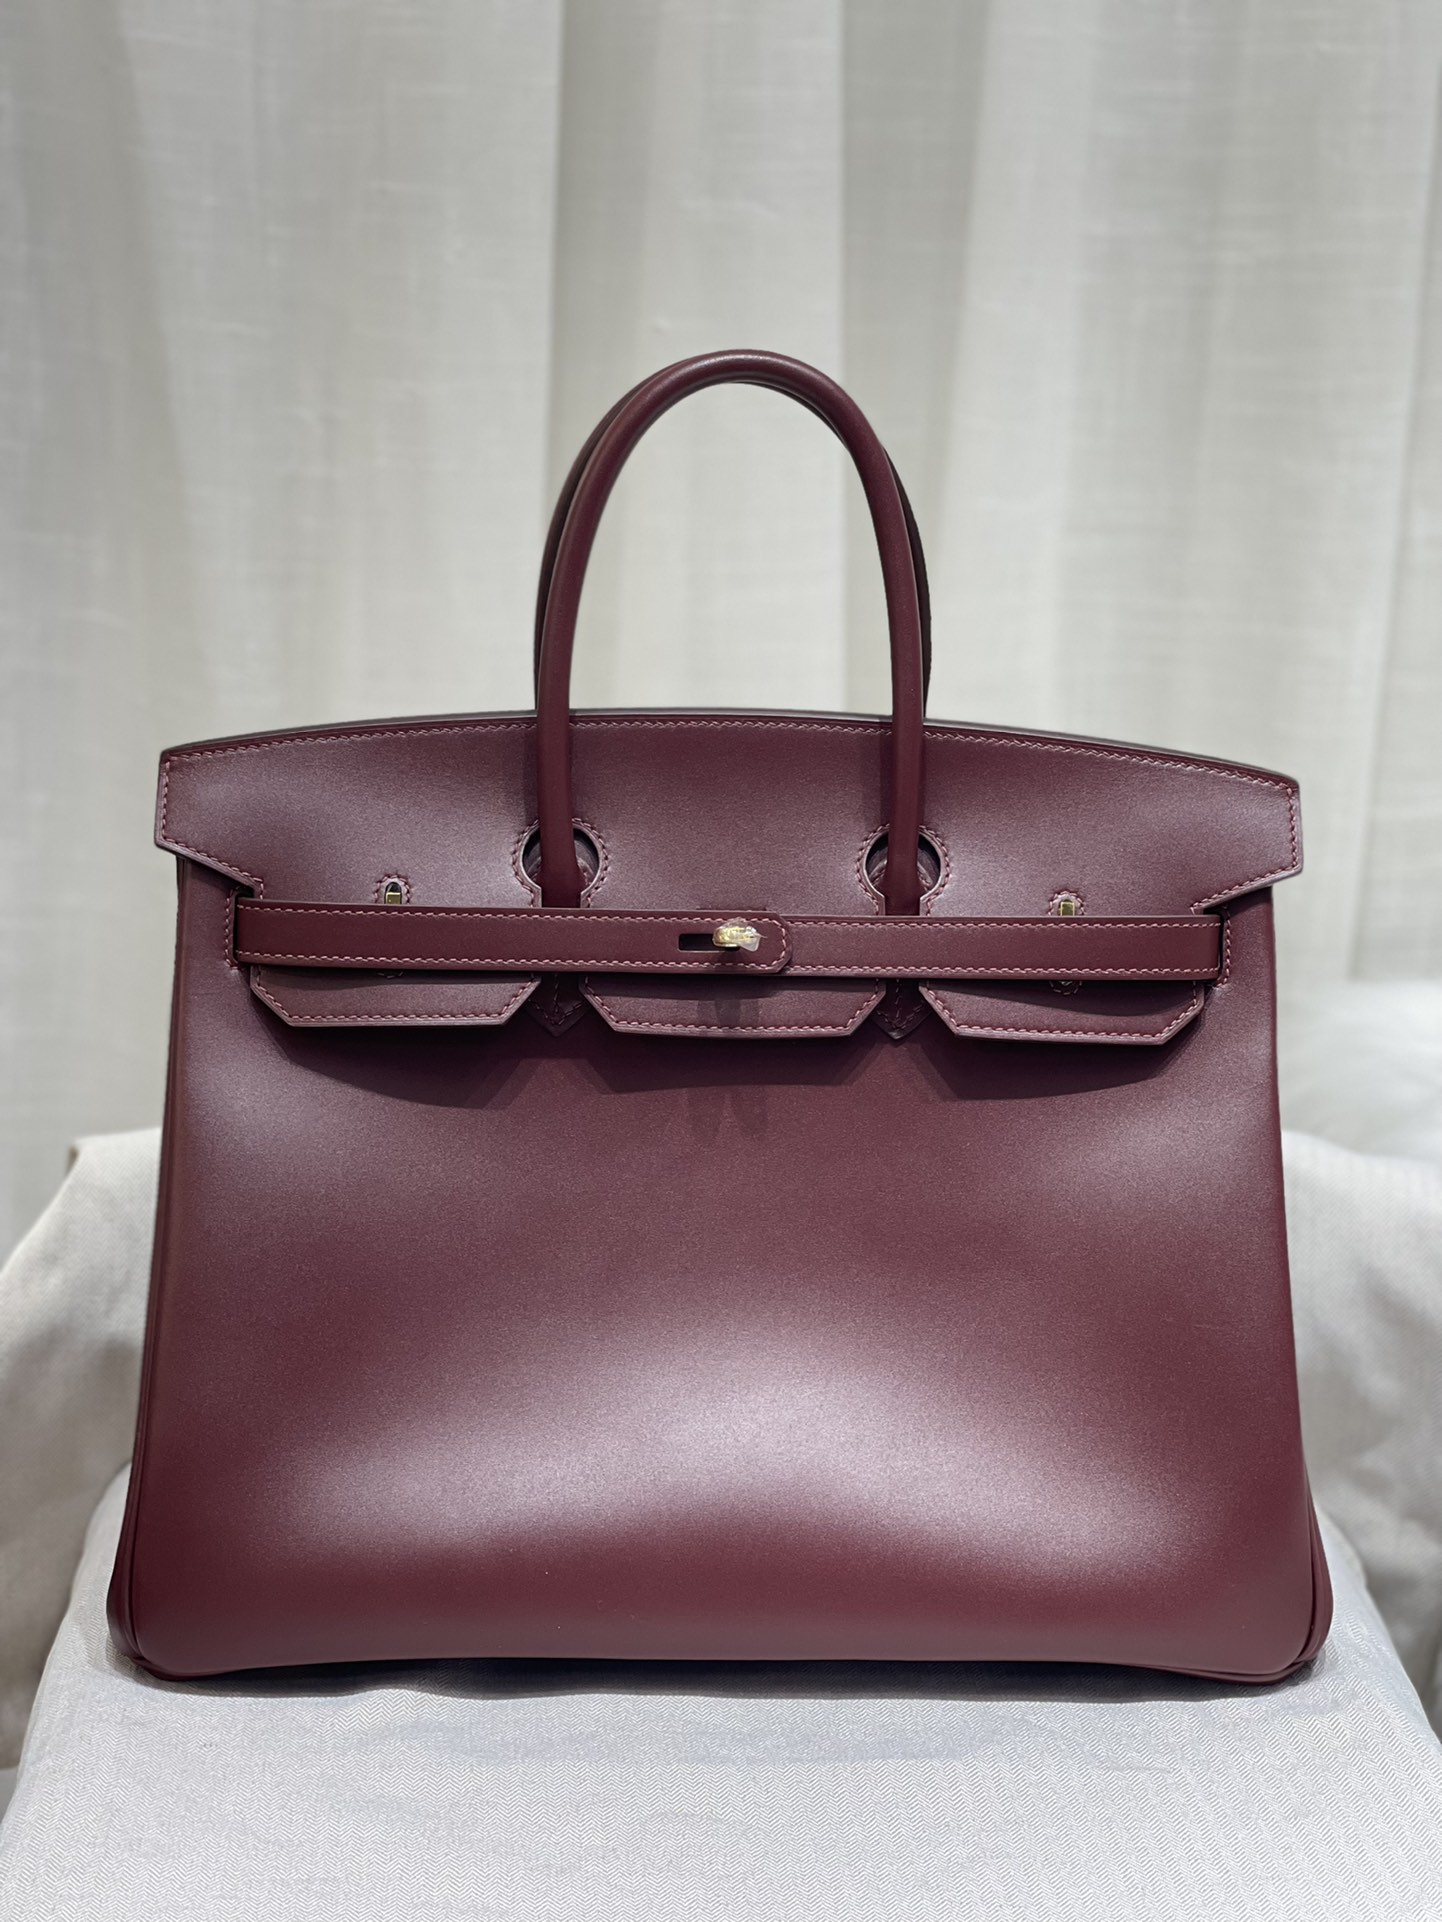 Where Can I Find
 Hermes Birkin Bags Handbags Fake Cheap best online
 Burgundy Red